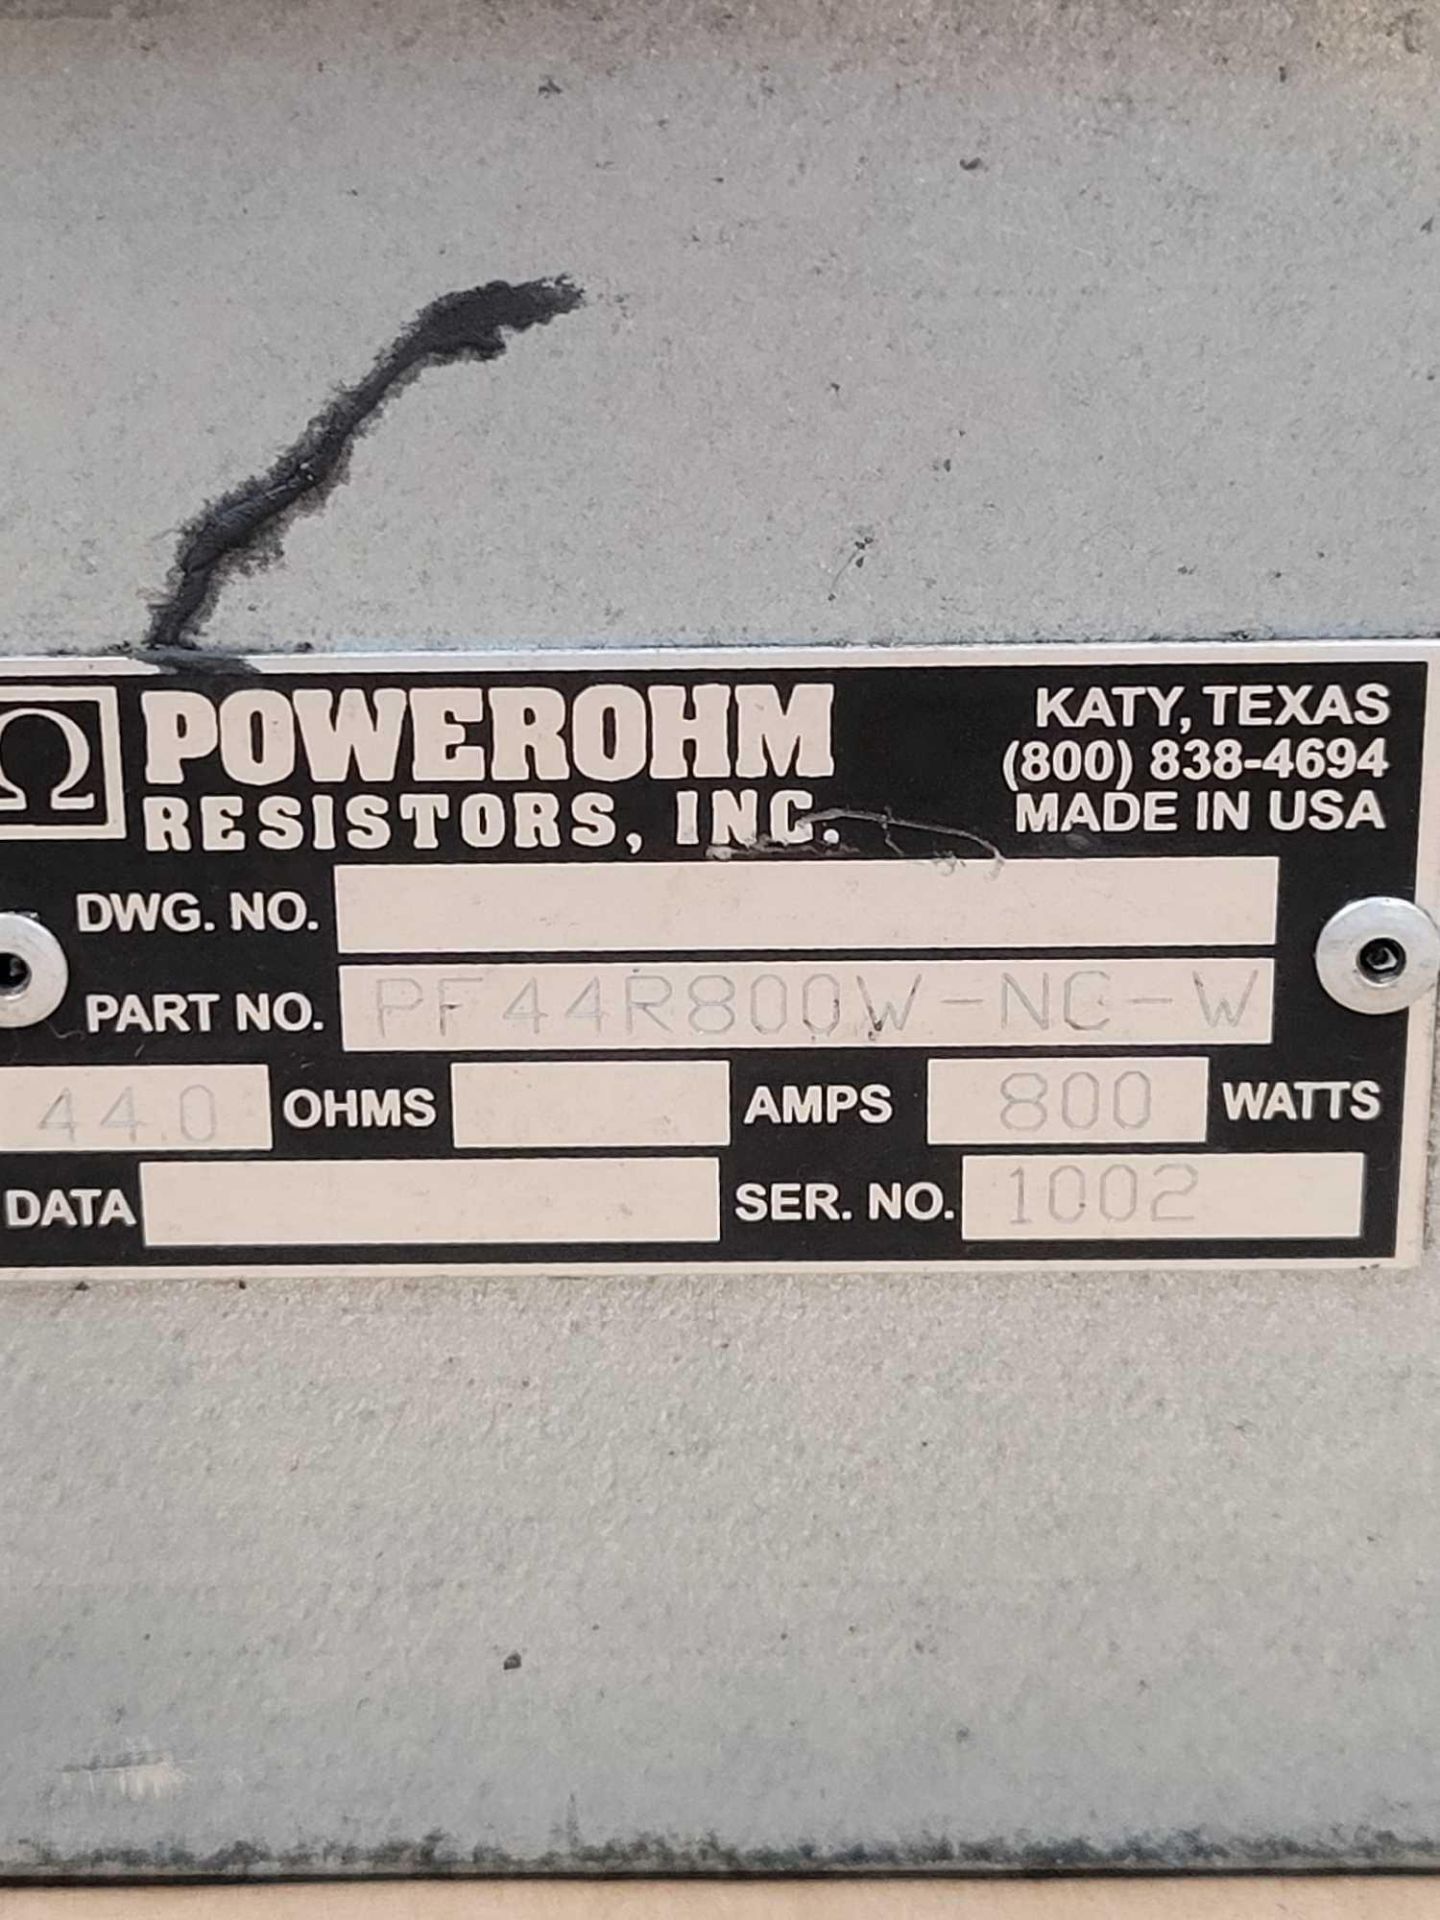 LOT OF 2 POWEROHM PF44R800W-NC-W / Braking Resistor  /  Lot Weight: 16.6 lbs - Image 2 of 5